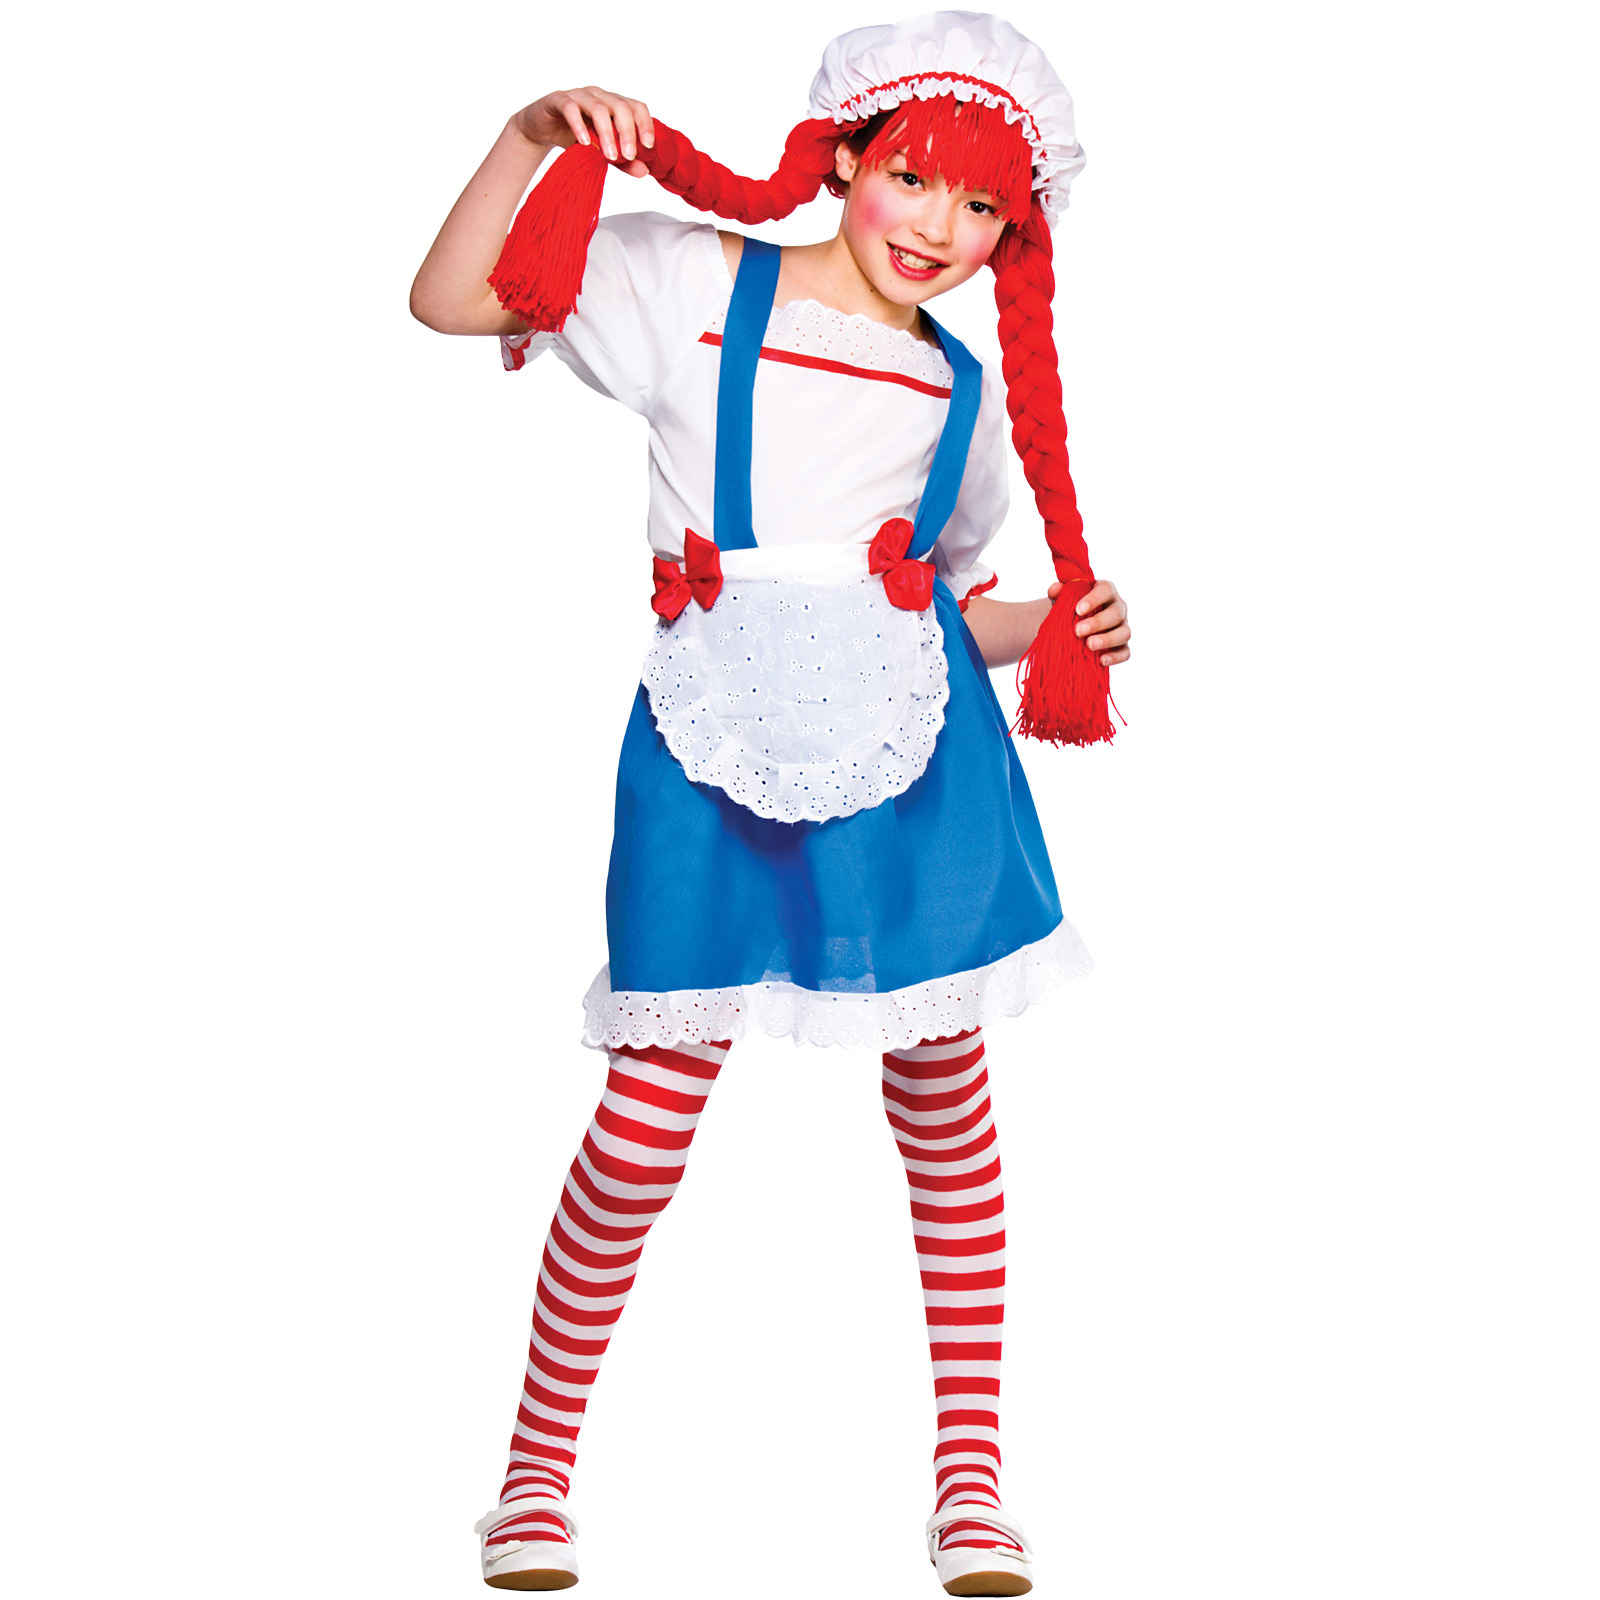 doll dress up costume